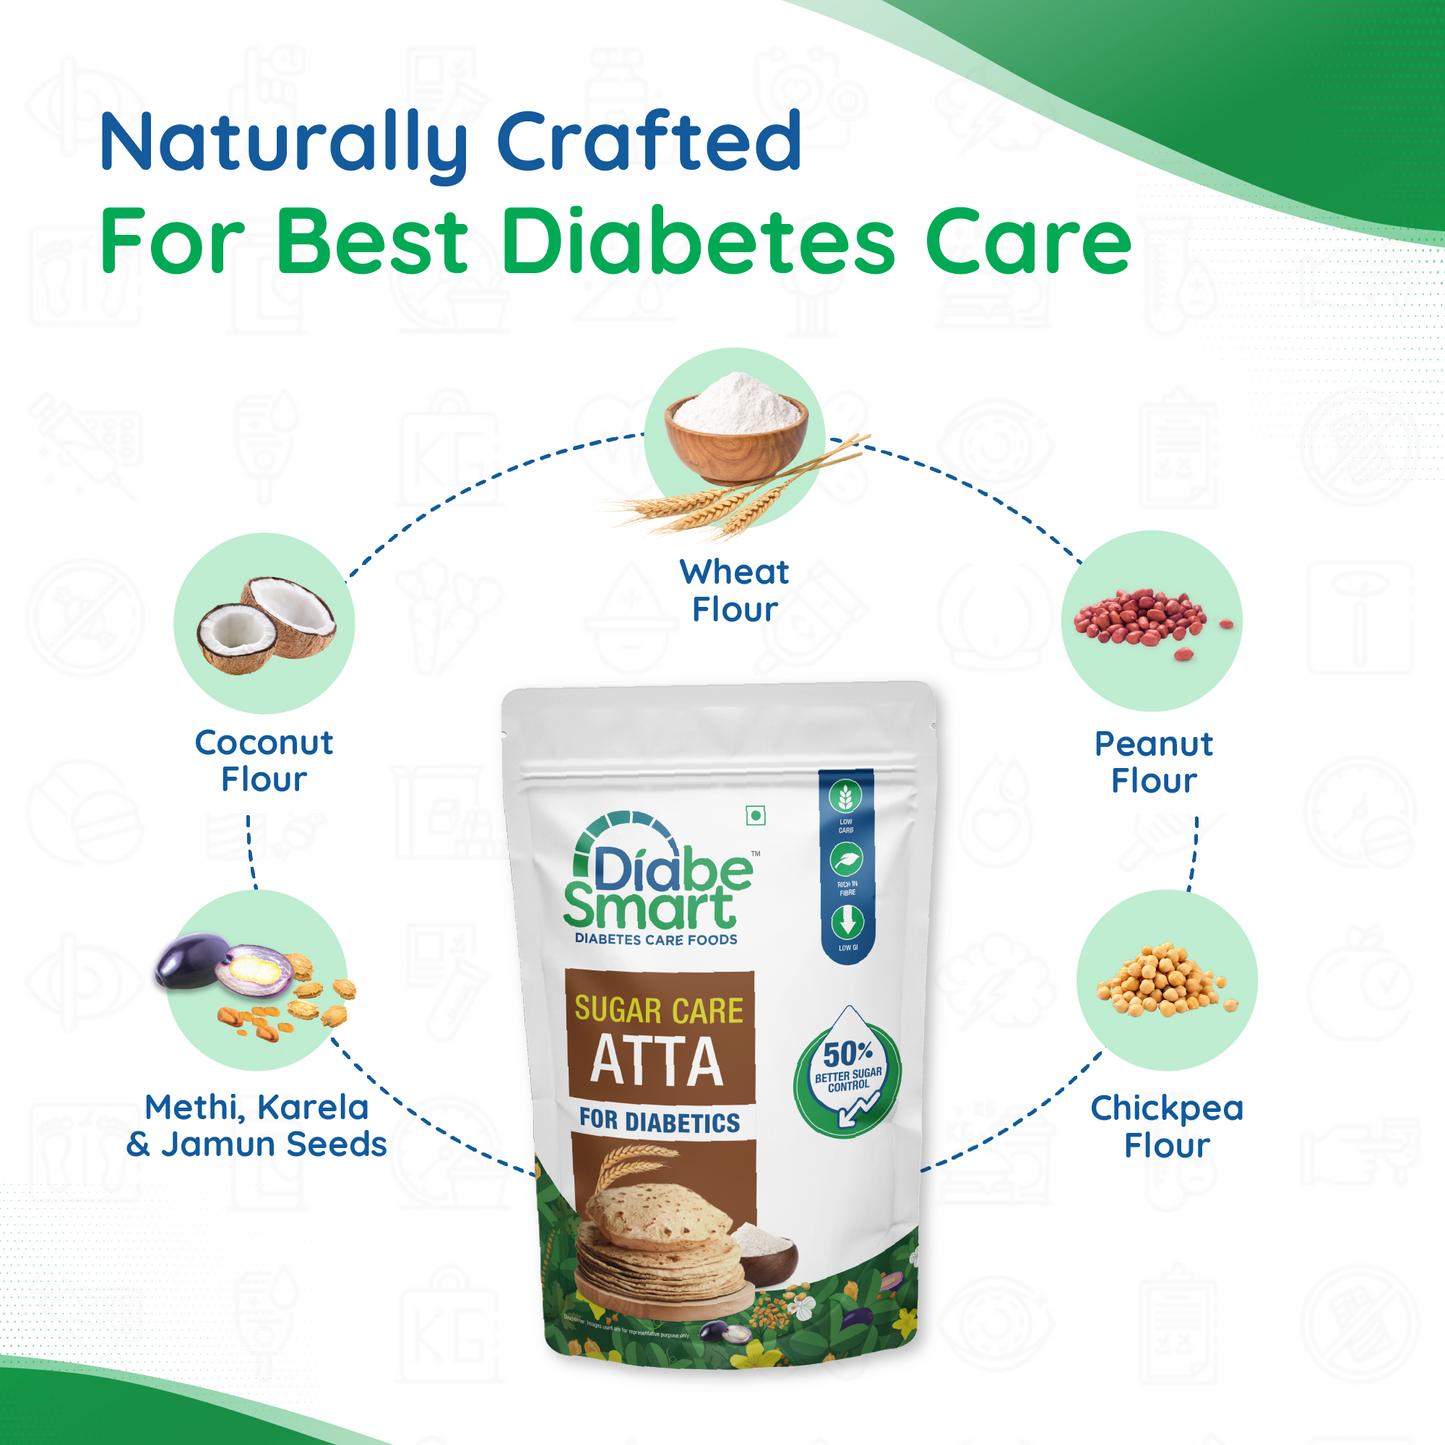 Sugar Care Atta - Best Atta For Diabetics